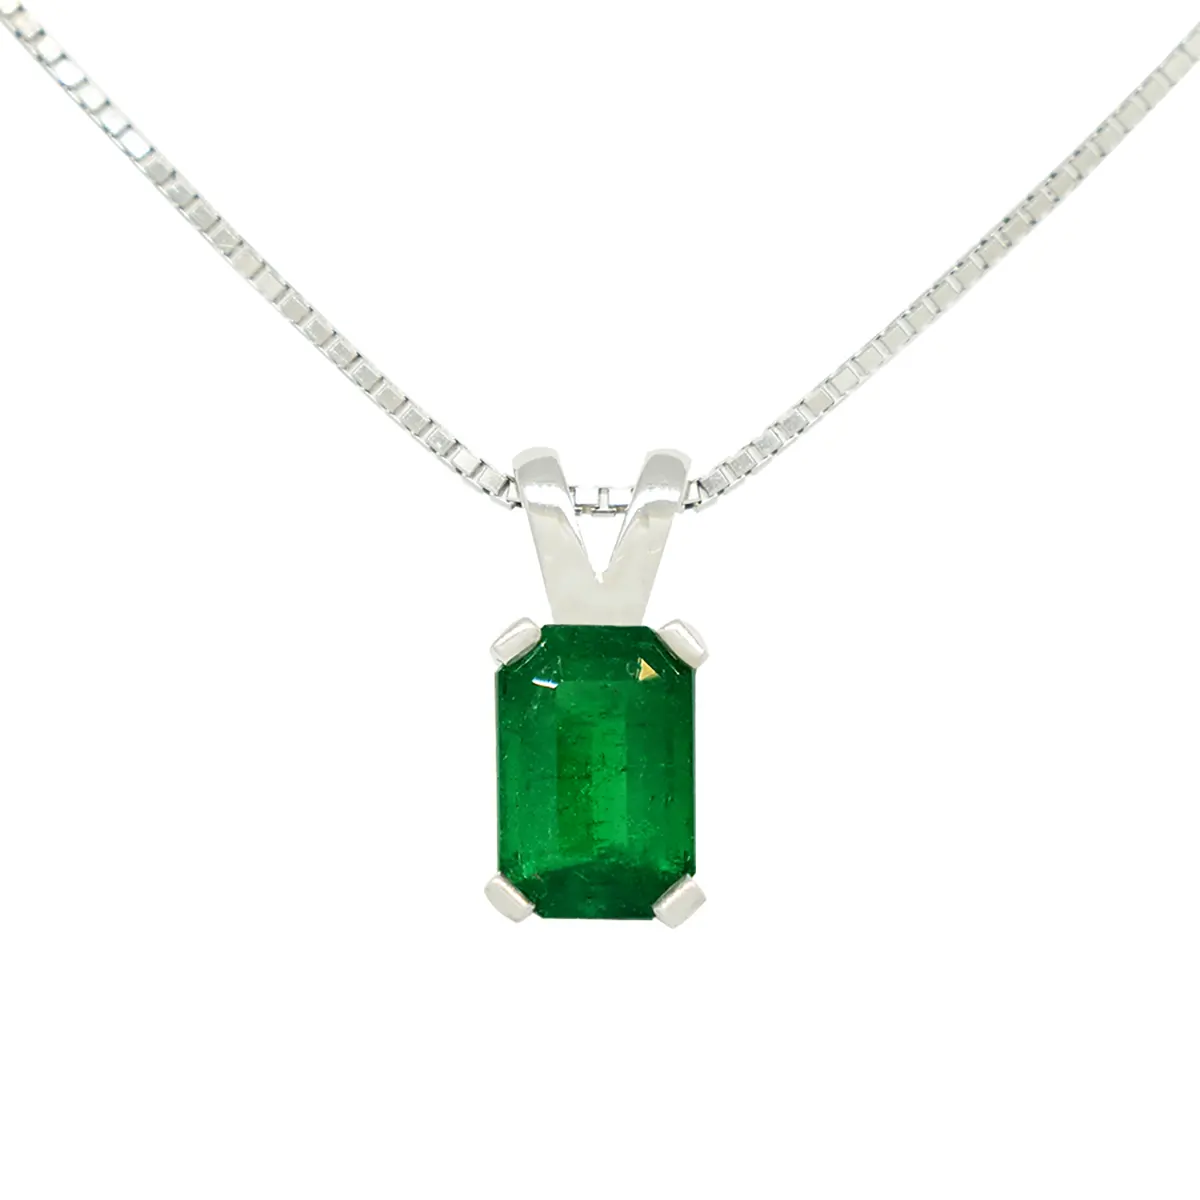 Emerald Cut Emerald Set in 18K White Gold Solitaire Pendant